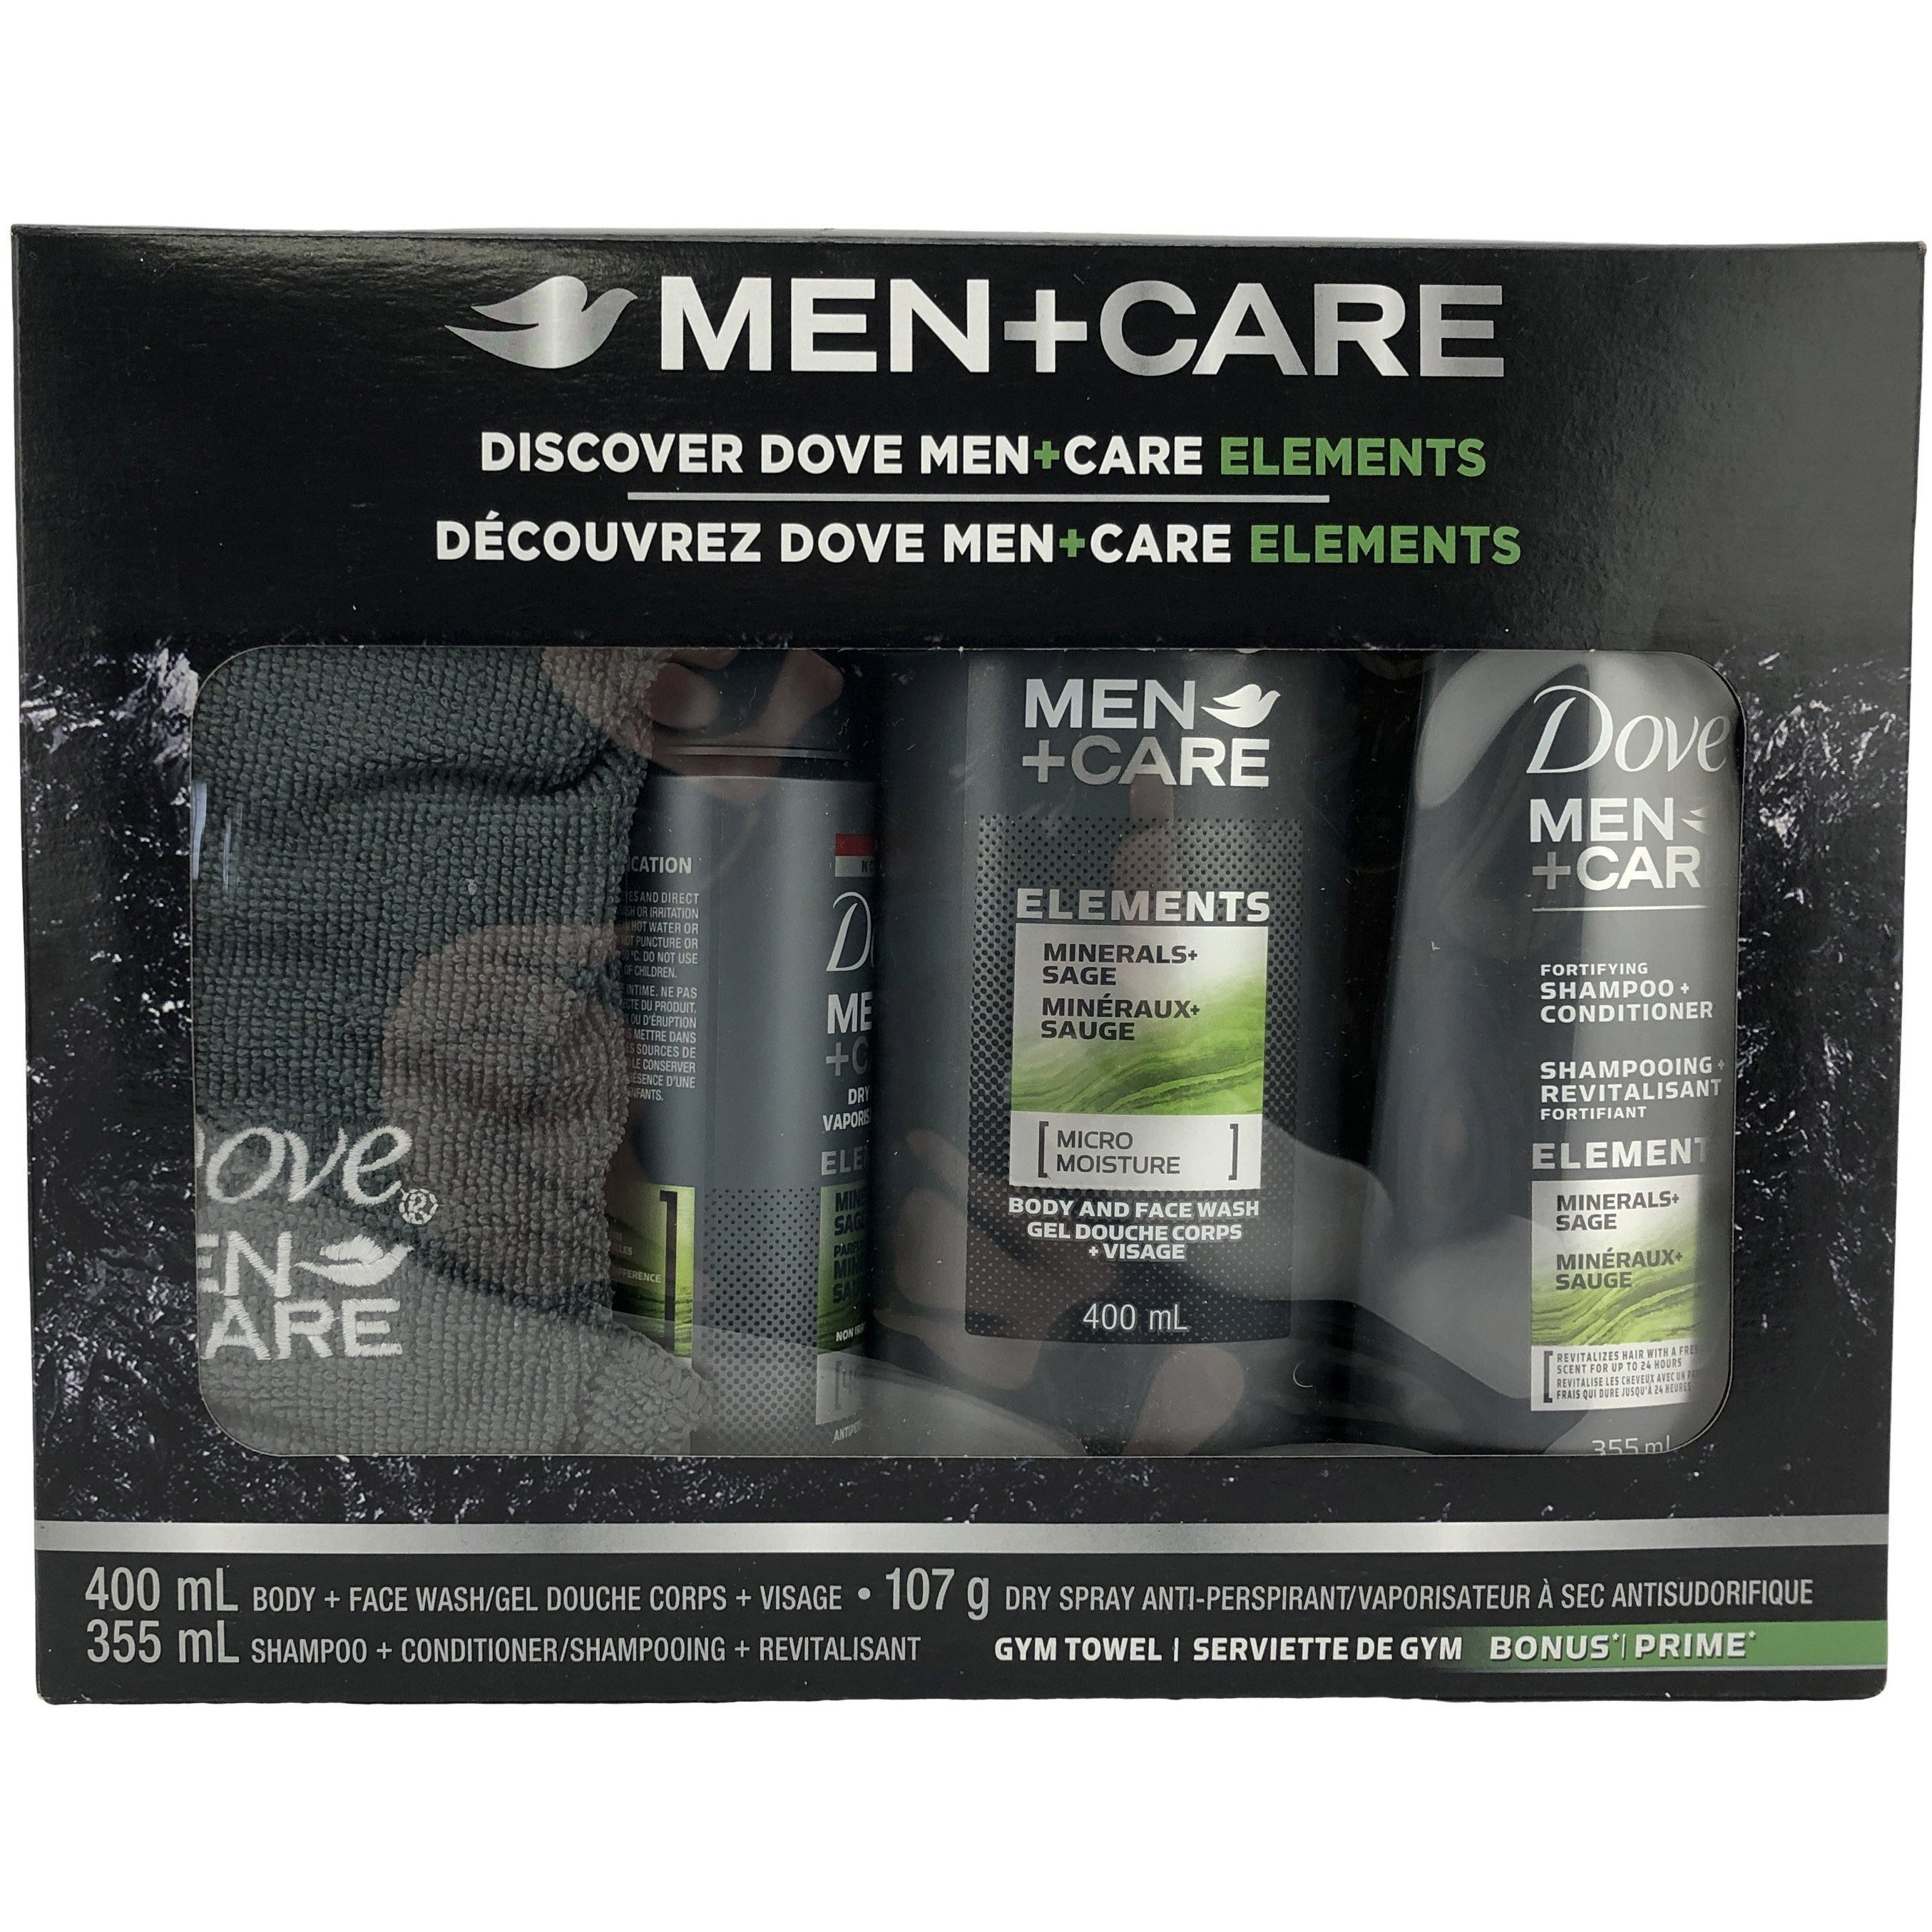 Dove mens + care gift set containing shampoo body wash and antiperspirant plus a bonus gym towel